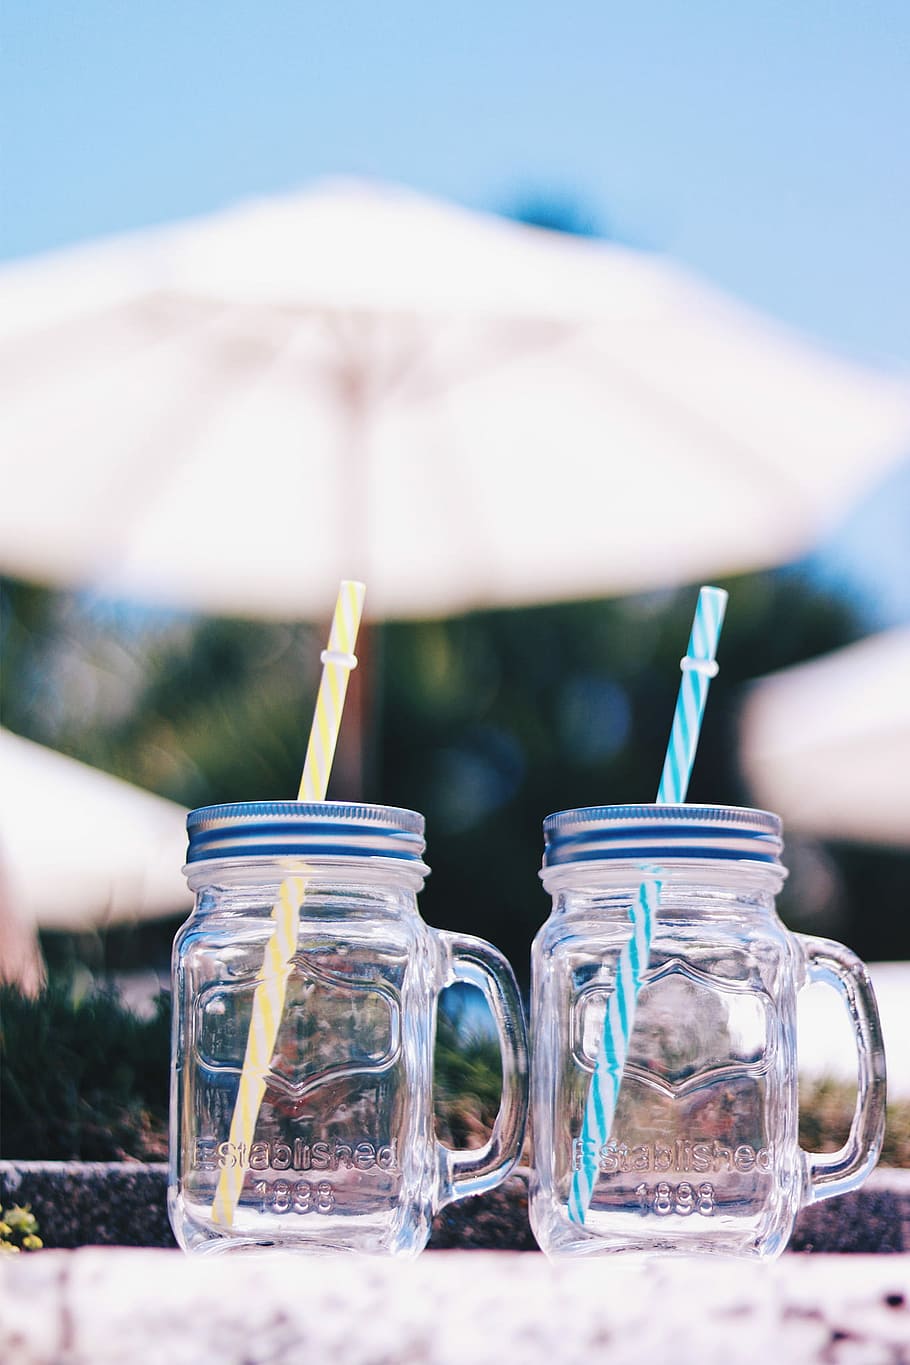 two clear glass mason jar near patio umbrella during daytime